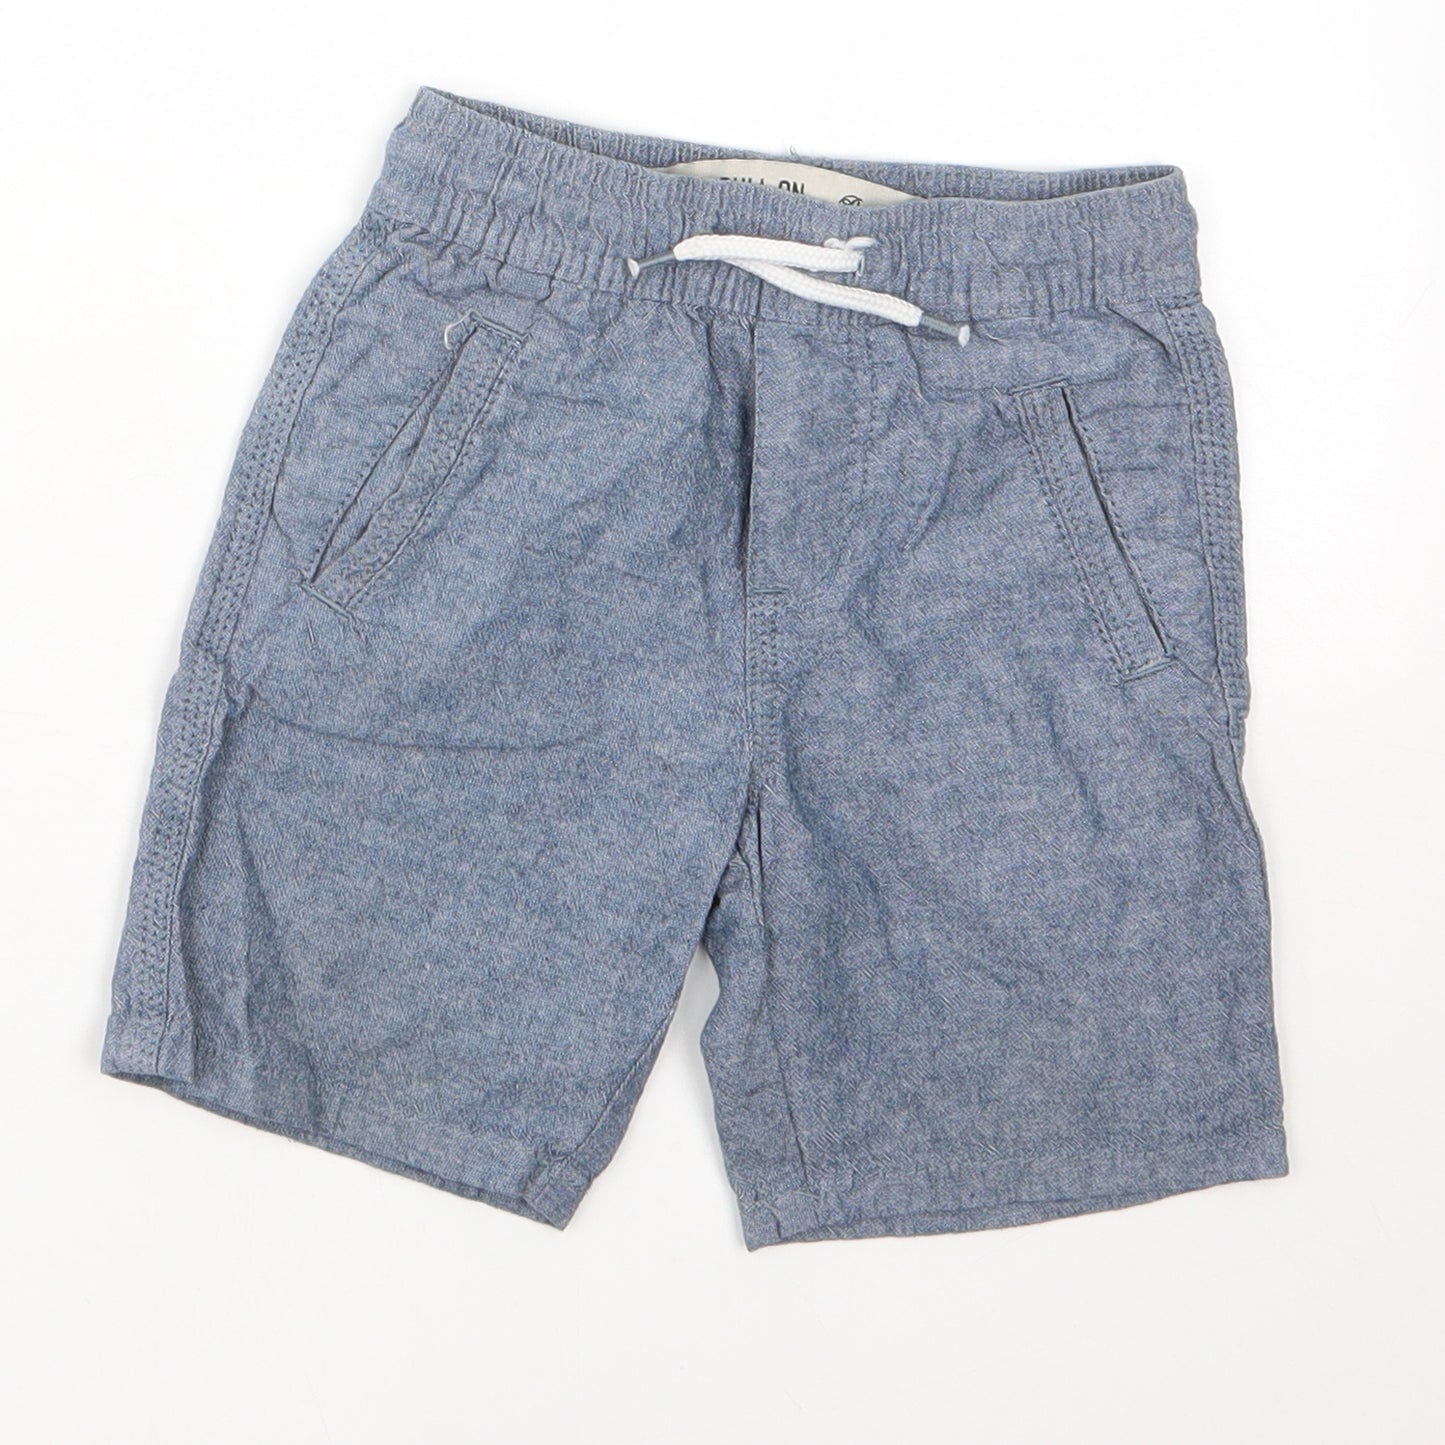 Primark Boys Blue  100% Cotton Sweat Shorts Size 2-3 Years  Regular